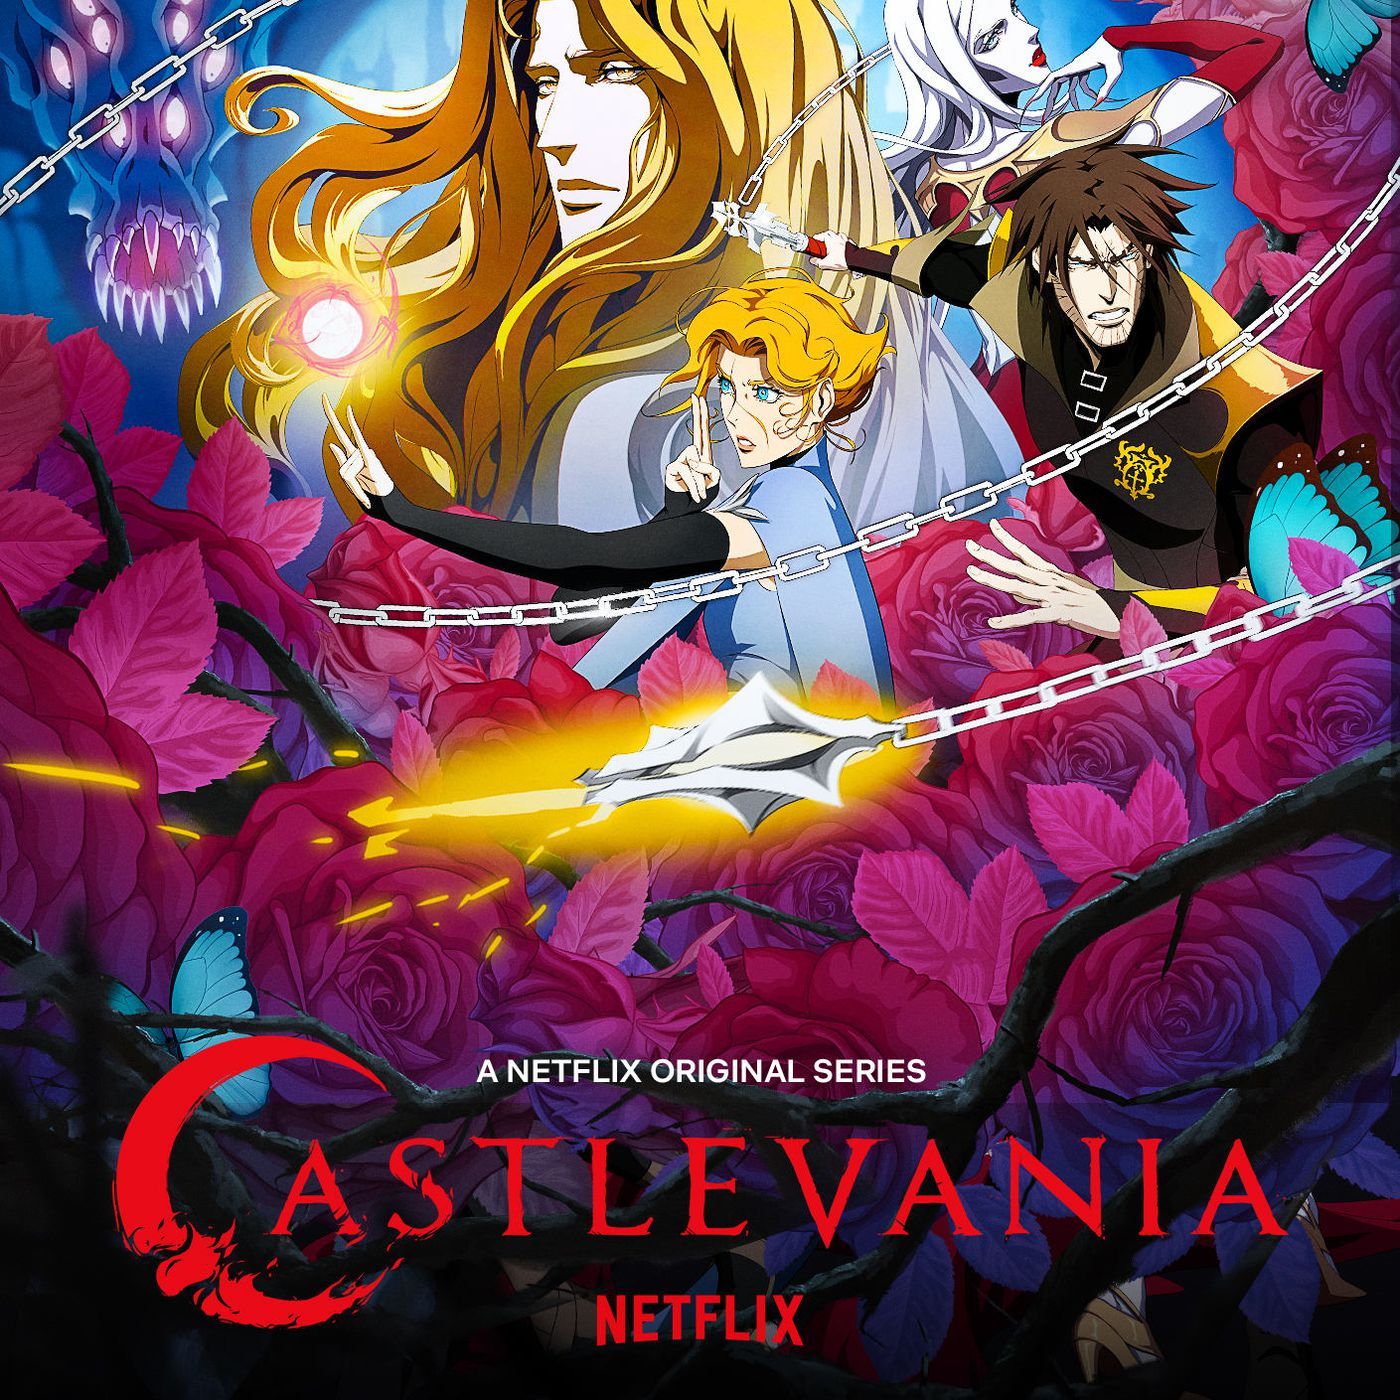 Castlevania Netflix Show Poster Wallpapers